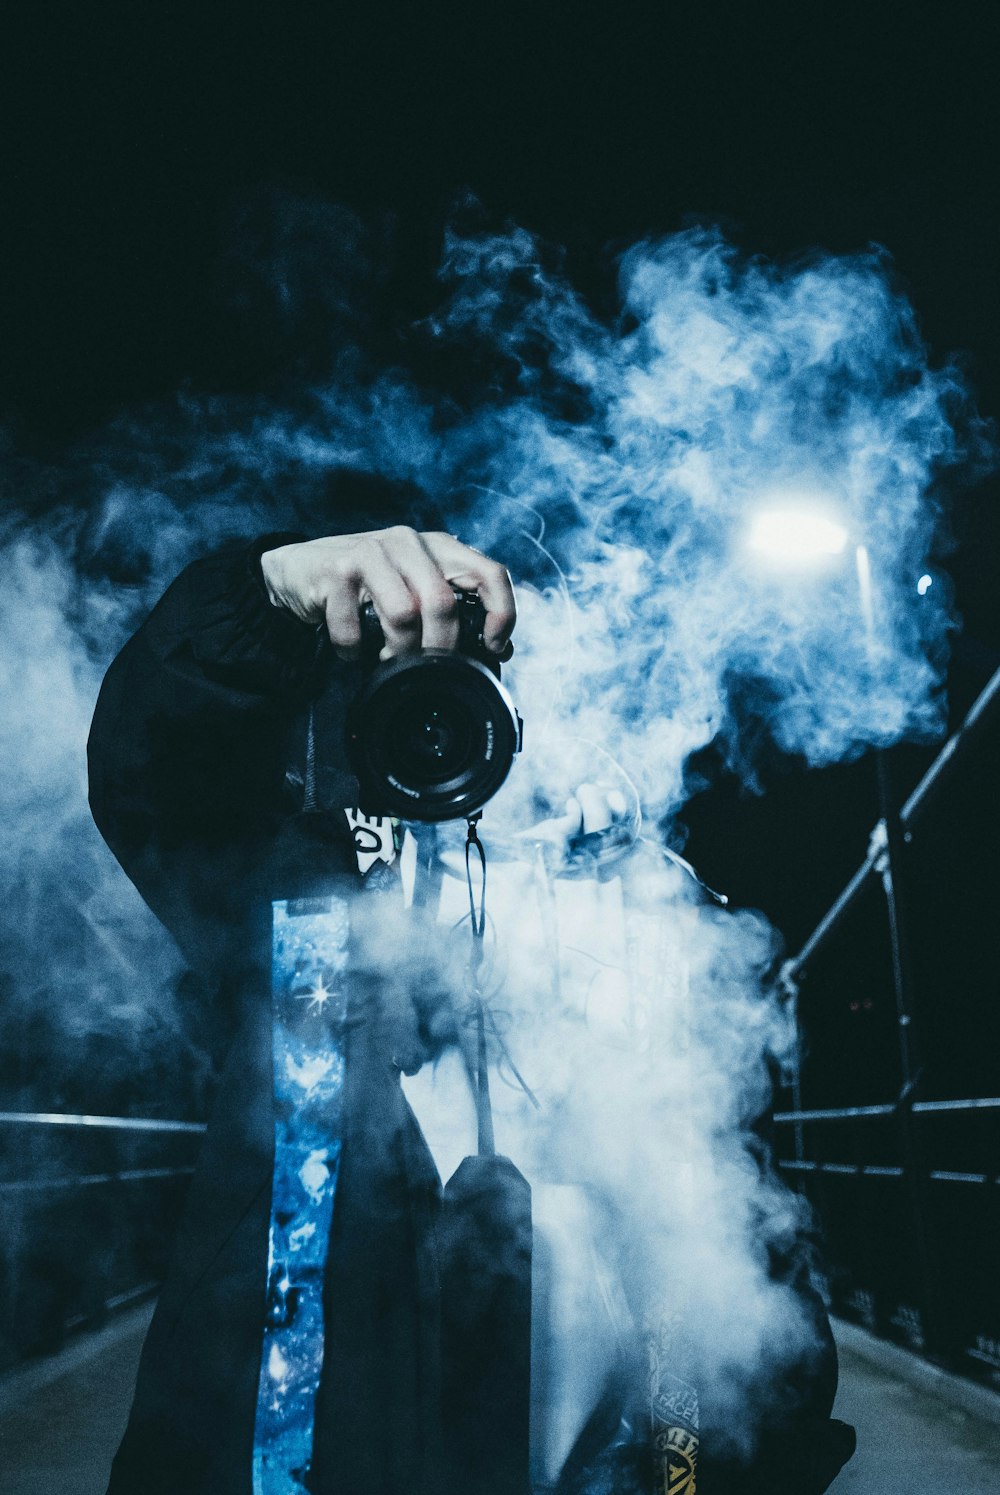 person using DSLR camera near white smoke